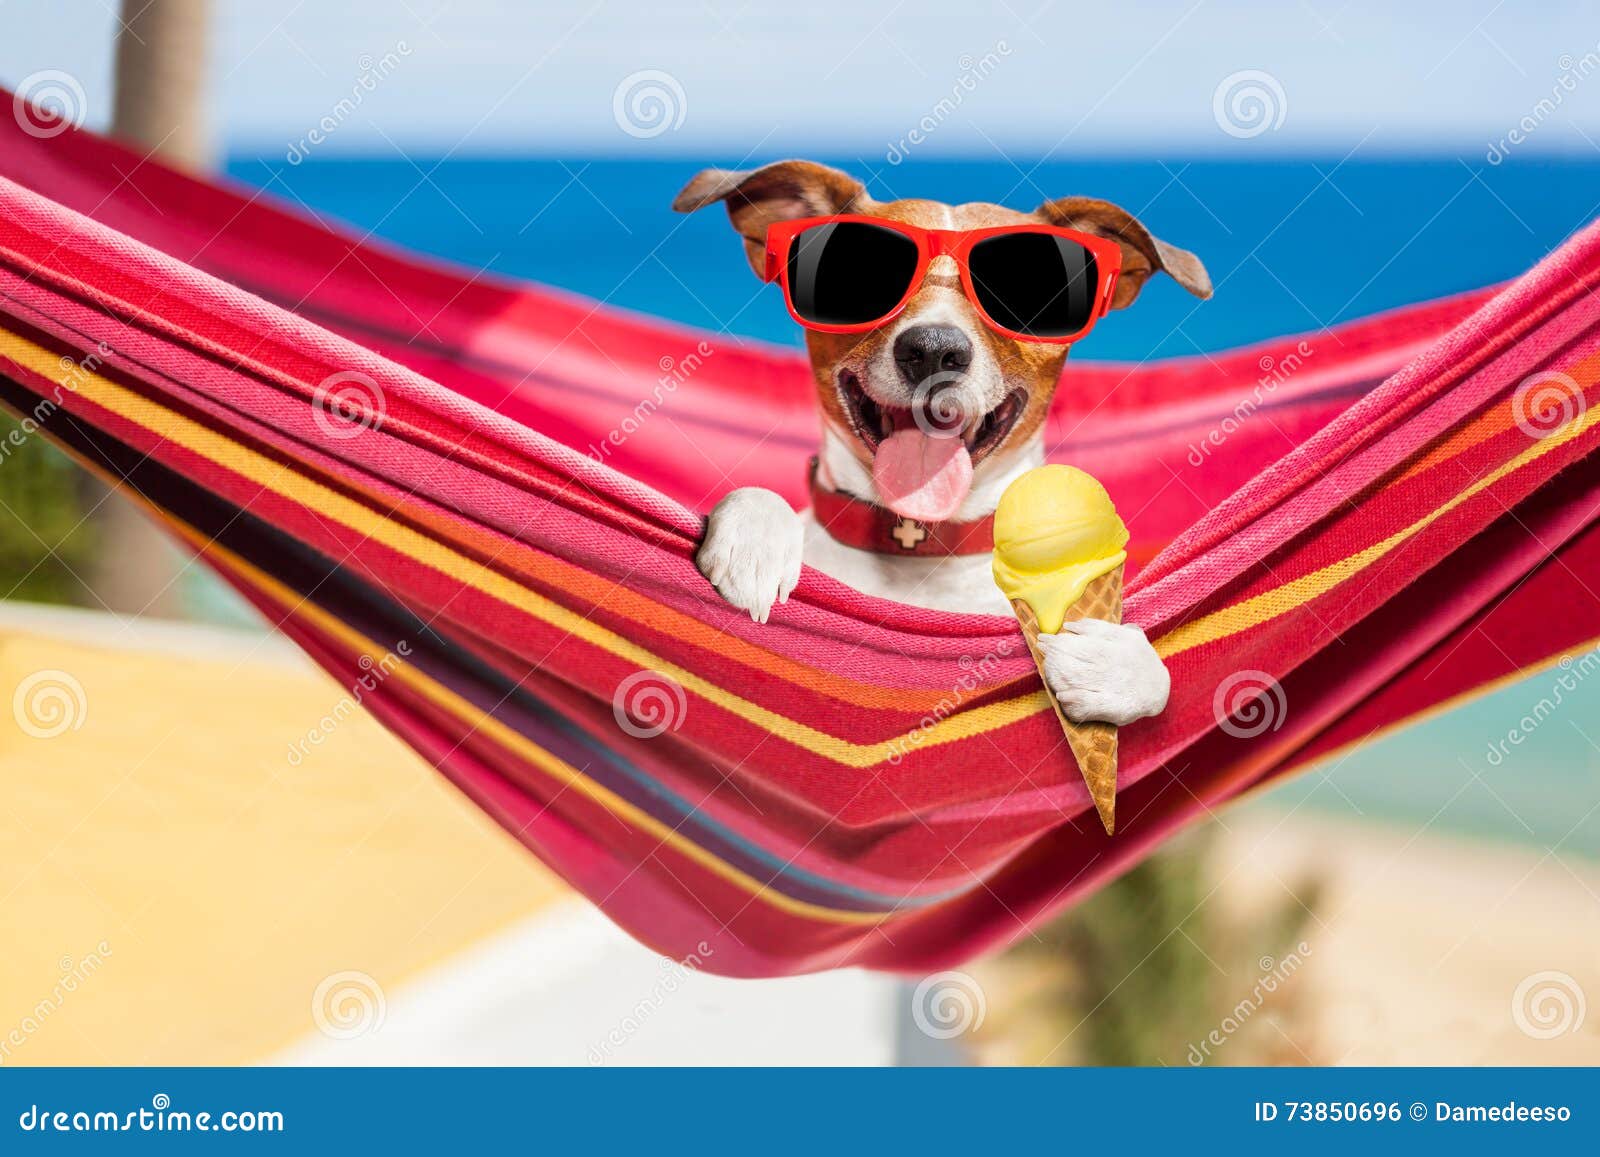 dog on hammock in summer with ice cream